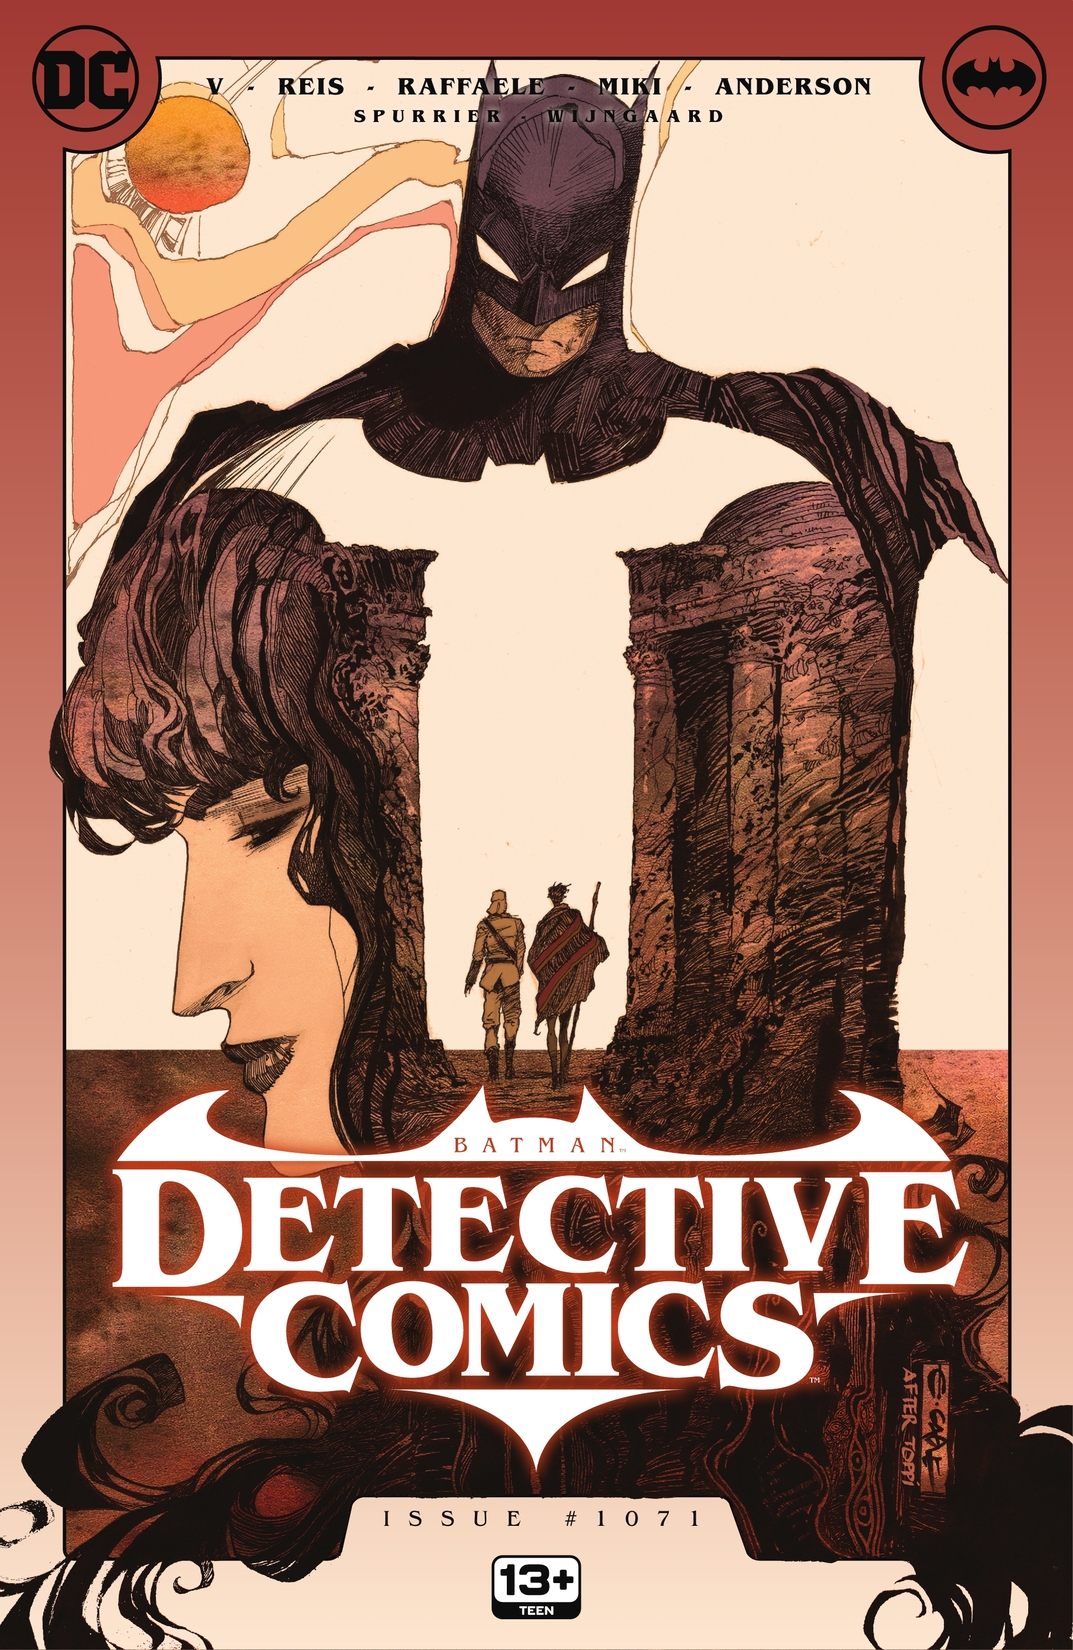 Detective Comics (2016-) #1071 preview images